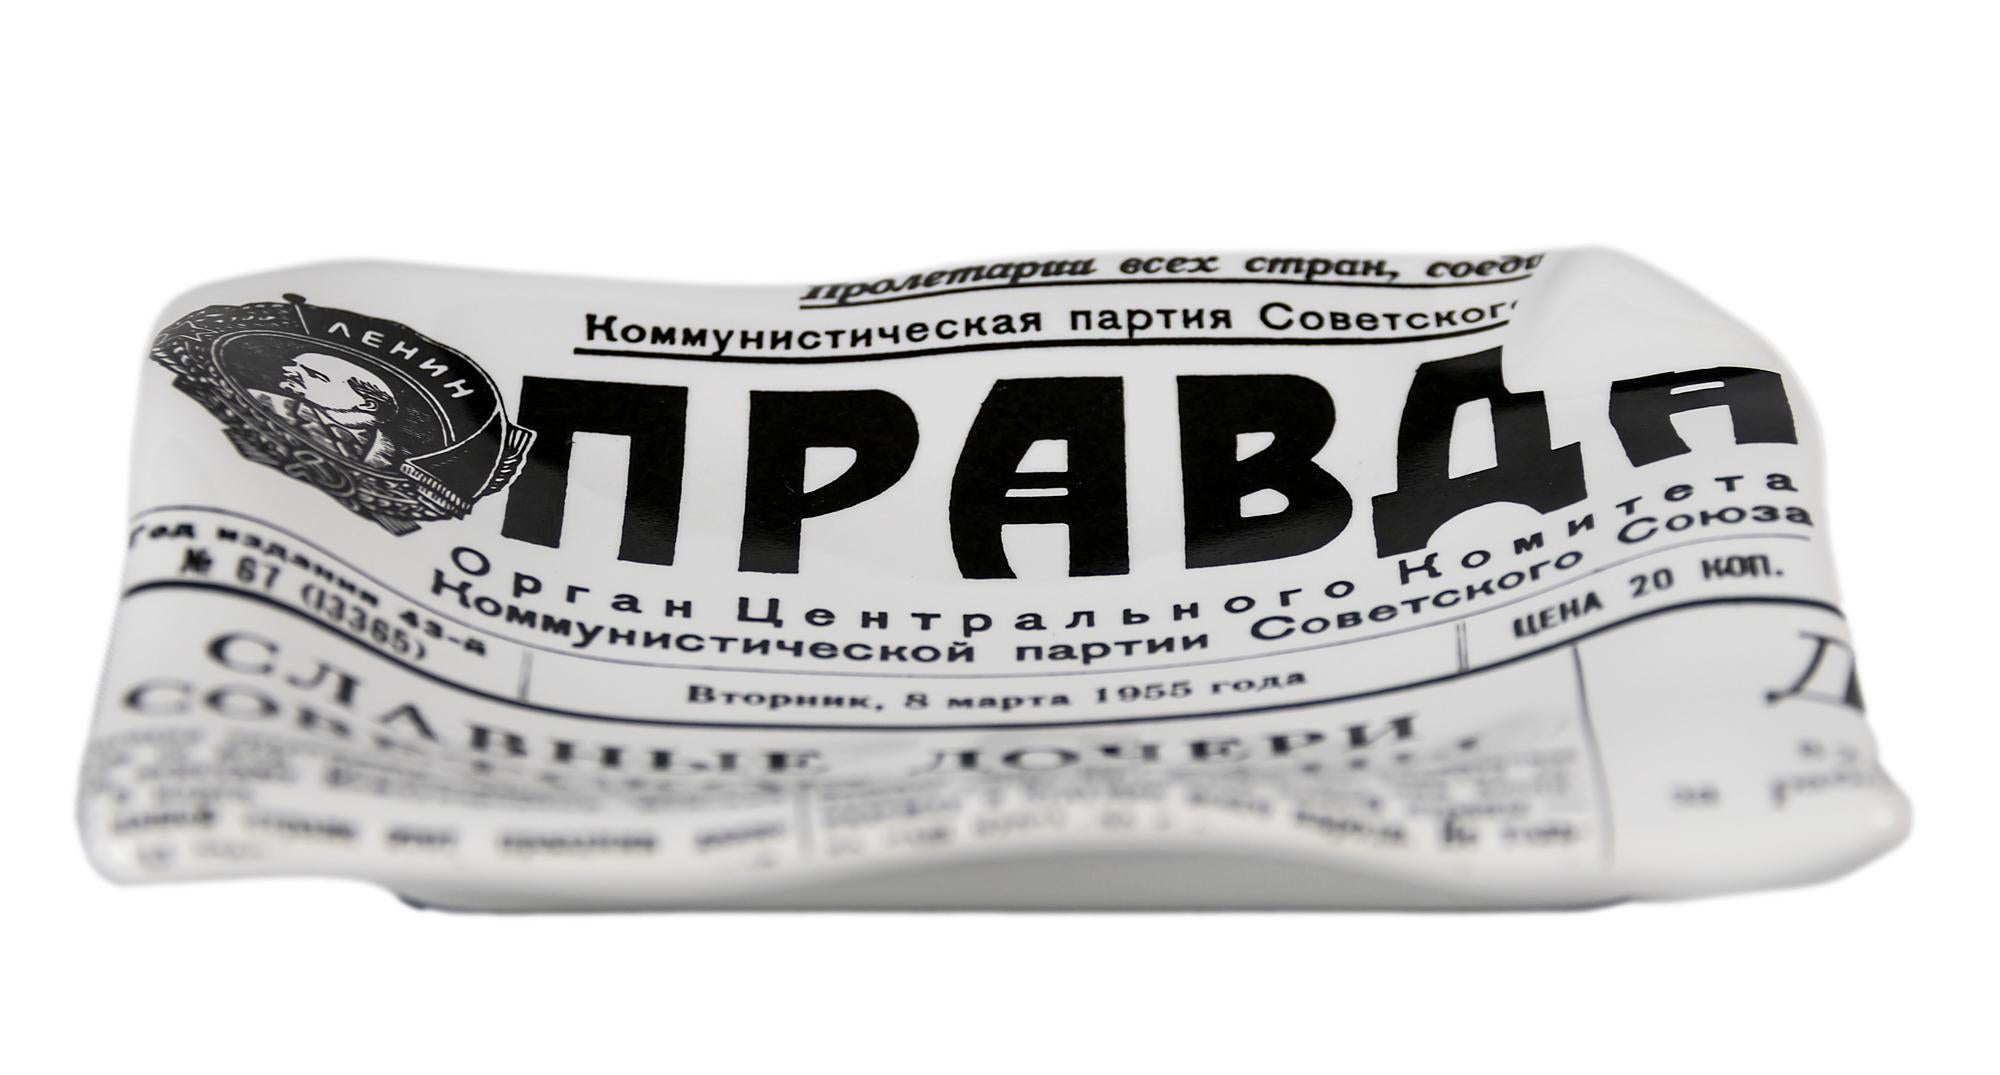 Fornasetti porcelain ashtray with the print of Pravda newspaper, circa 1970s.